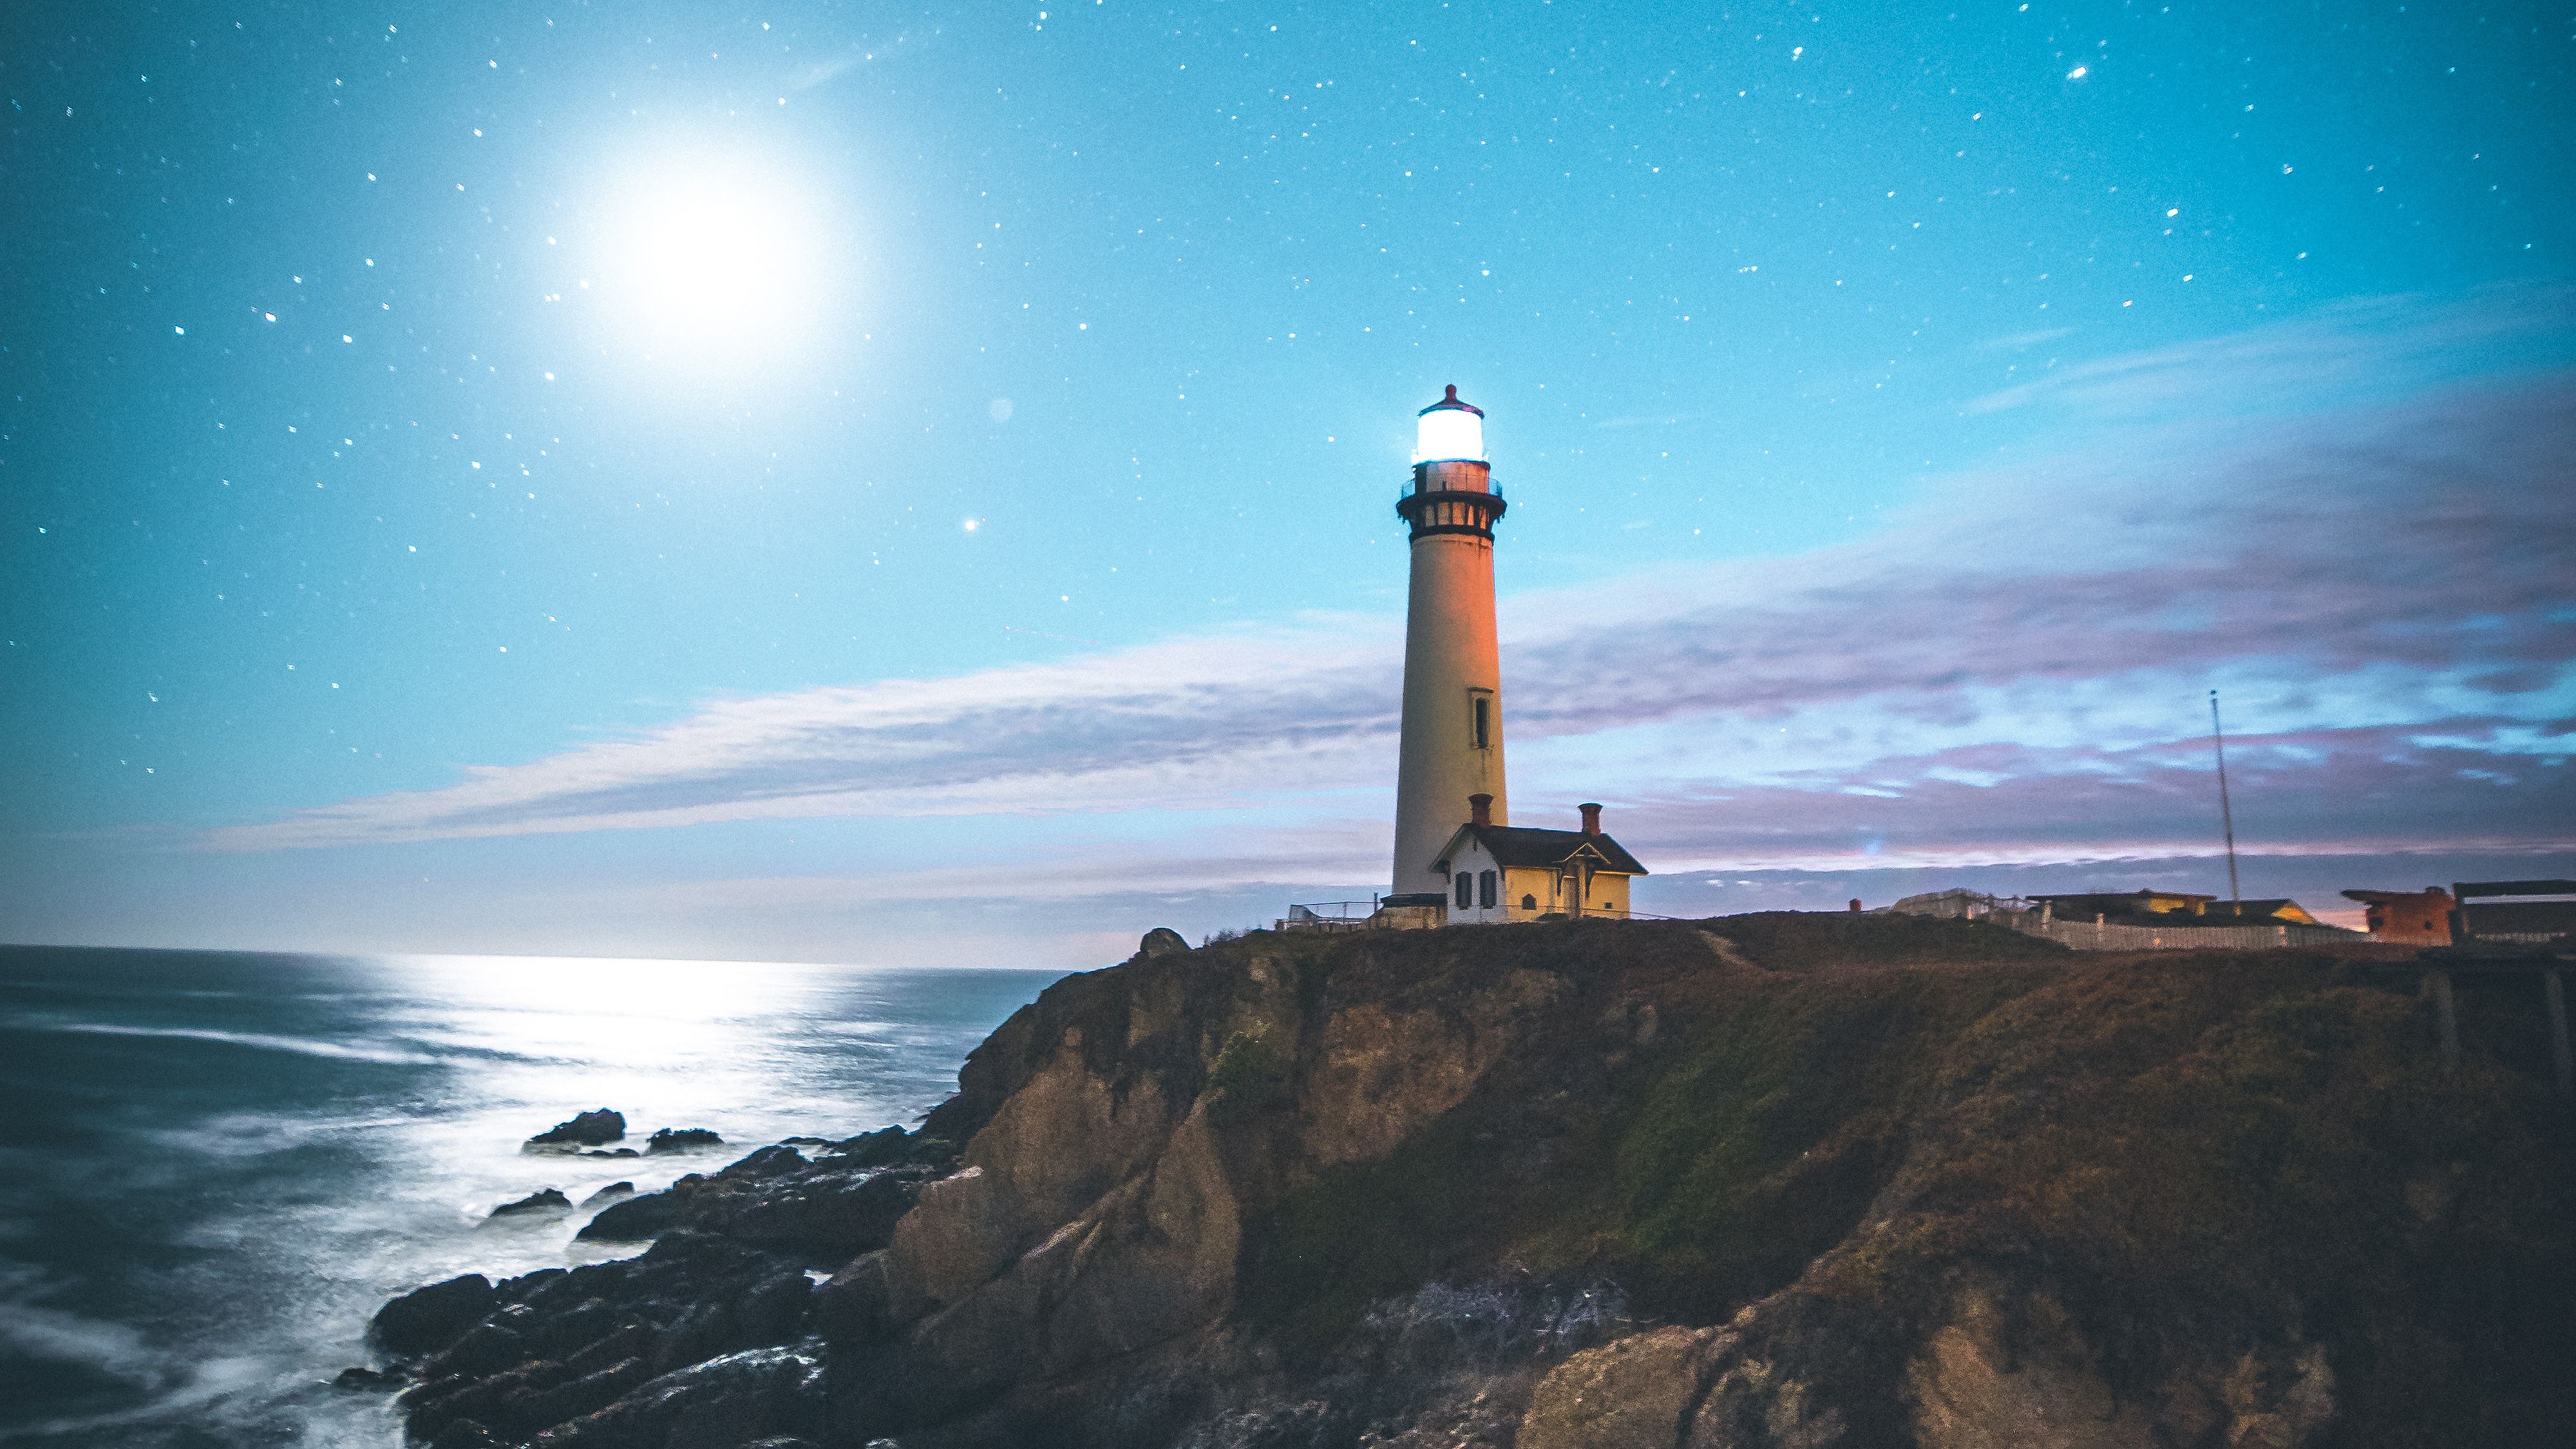 Coast Lighthouse 4k Ultra HD Wallpaper. Background Image